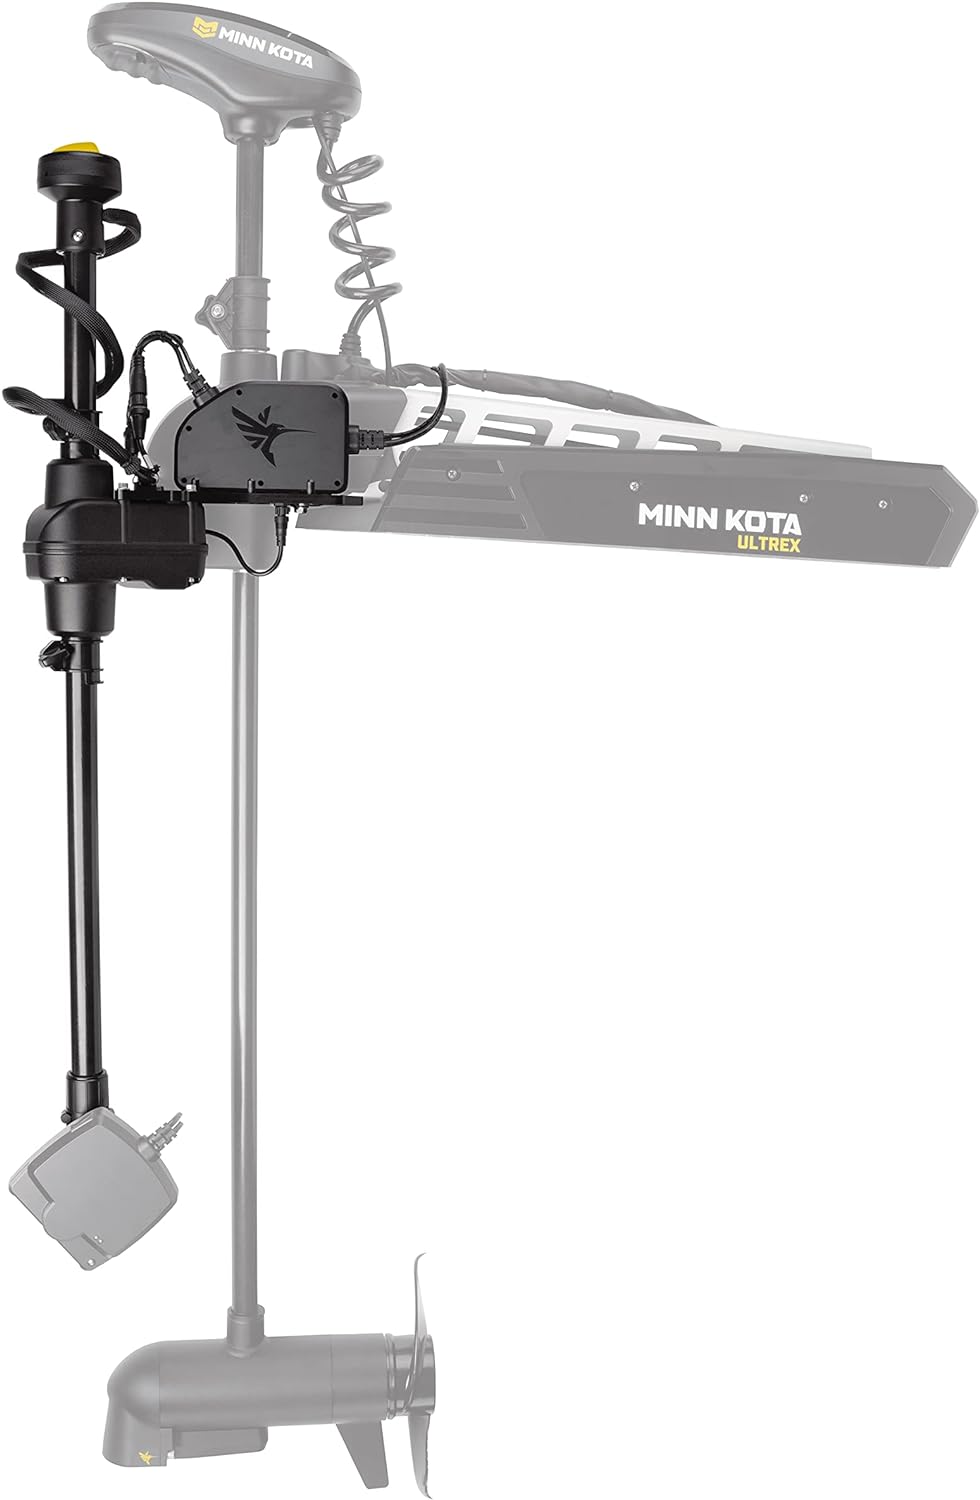 Humminbird 740210-1 MEGA Live TargetLock Adapter Kit - Ultrex 45/52 - Humminbird 740210-1 MEGA Live TargetLock Adapter Kit Review